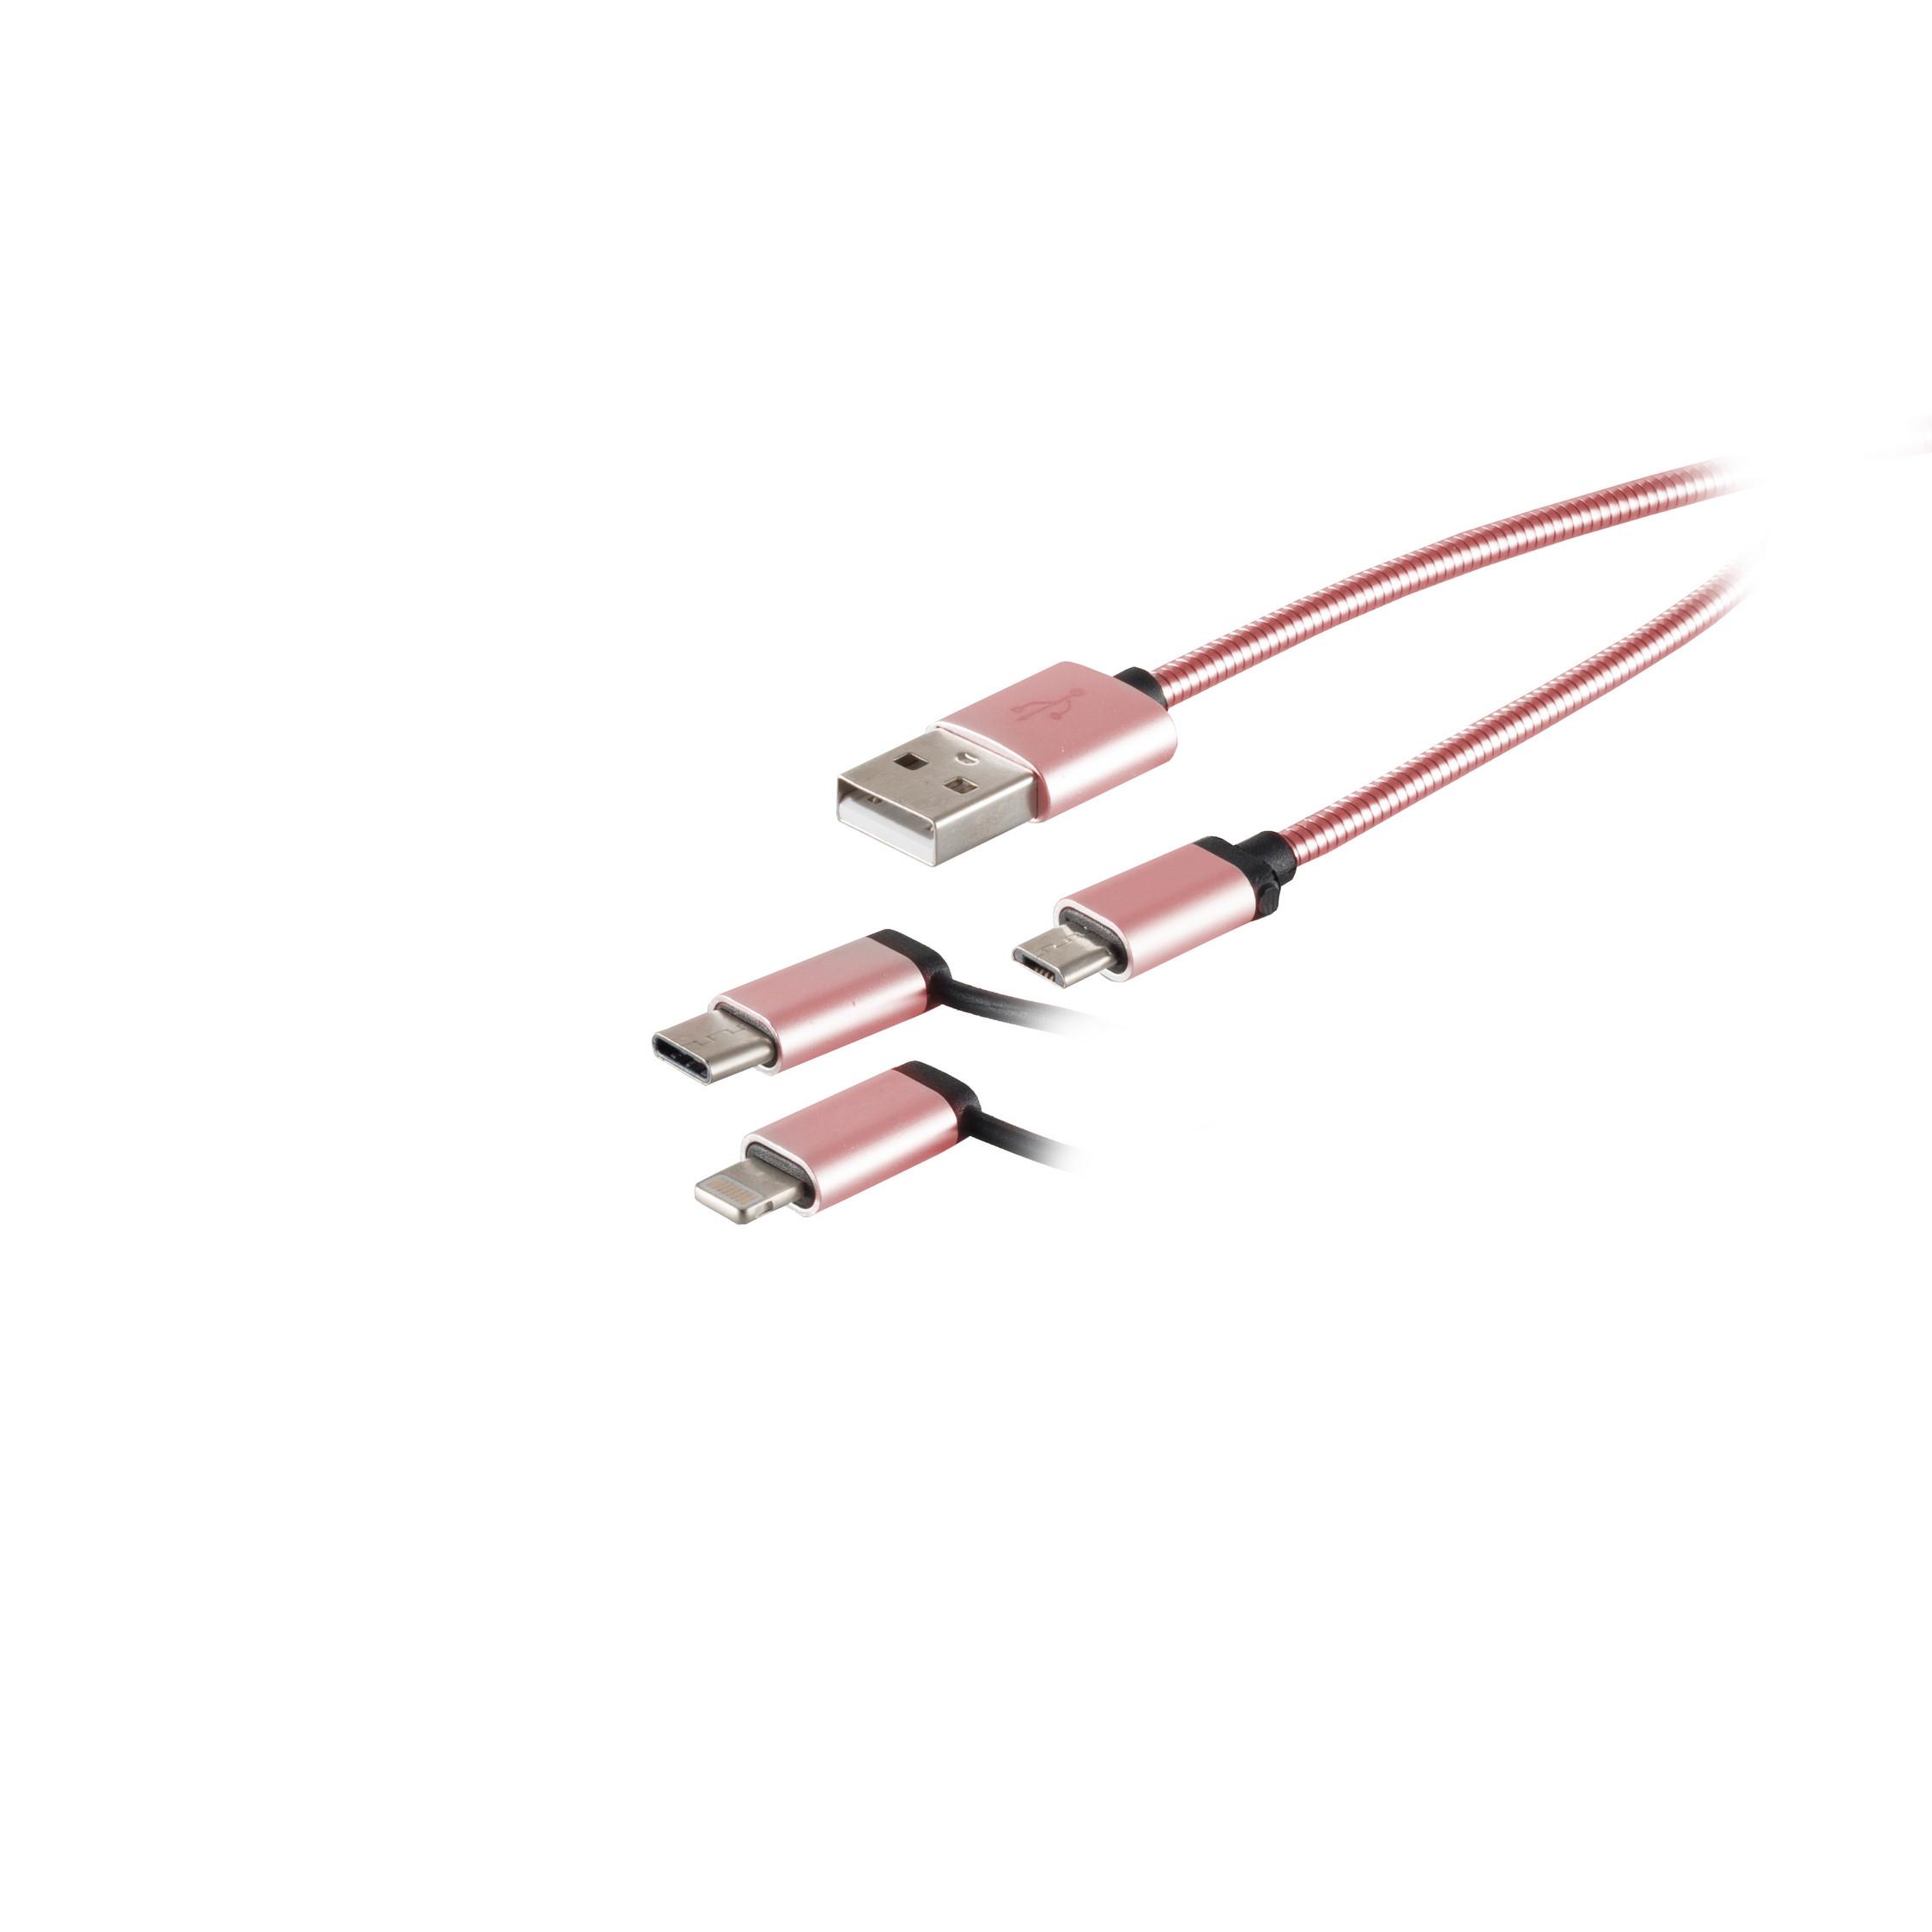 S/CONN MAXIMUM 3in1 1m MicroB/ USB CONNECTIVITY Ladekabel Kabel Stecker TypC/ 8-pin